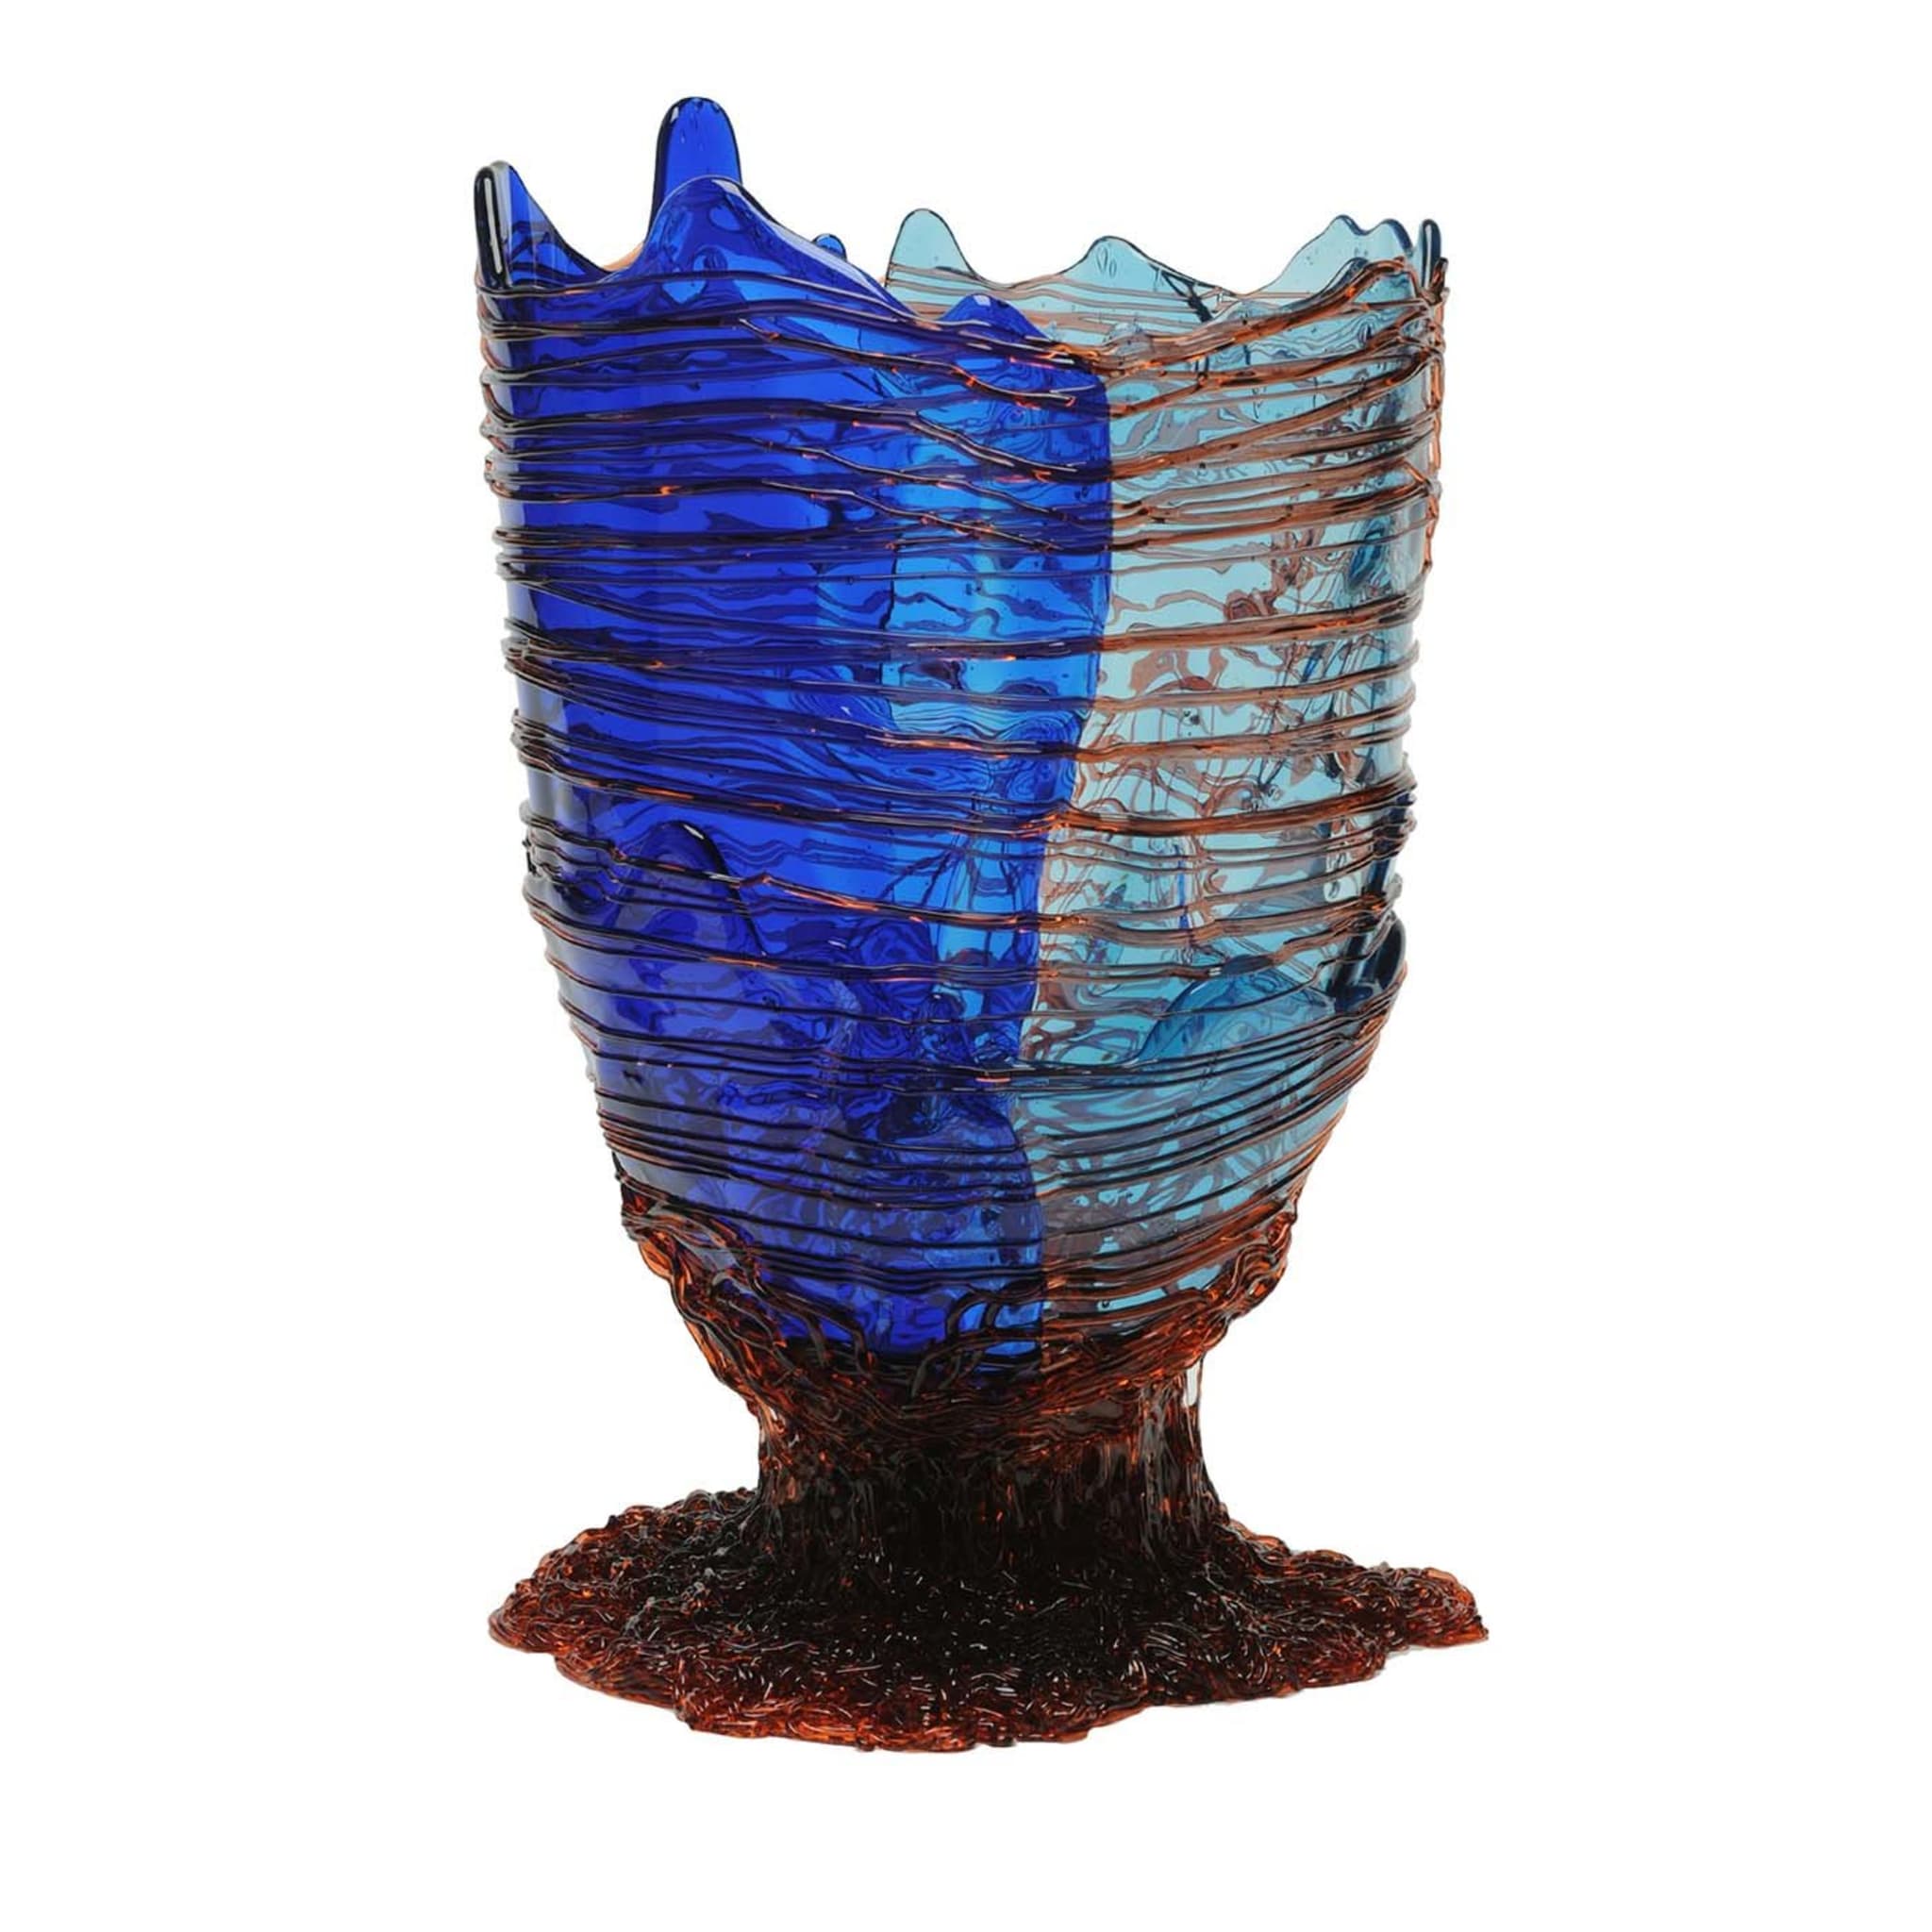 Grand vase bleu et gris Spaghetti de Gaetano Pesce - Vue principale